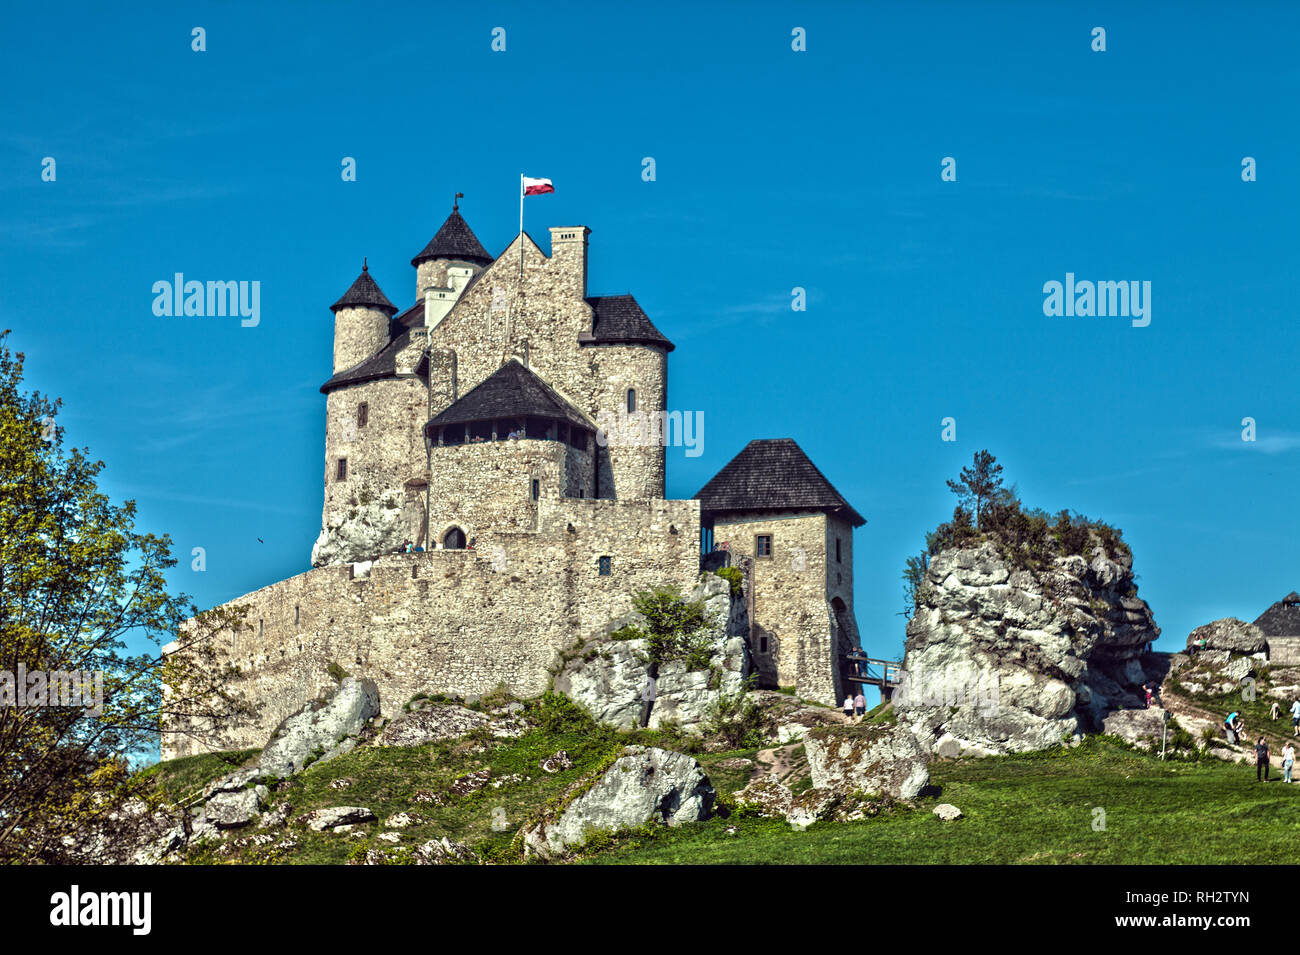 BOBOLICE, POLAND - APRIL 28, 2018: Gothic castle and hotel in Bobolice, Poland. Castle in the village of Bobolice, Jura Krakowsko-Czestochowska. Built Stock Photo